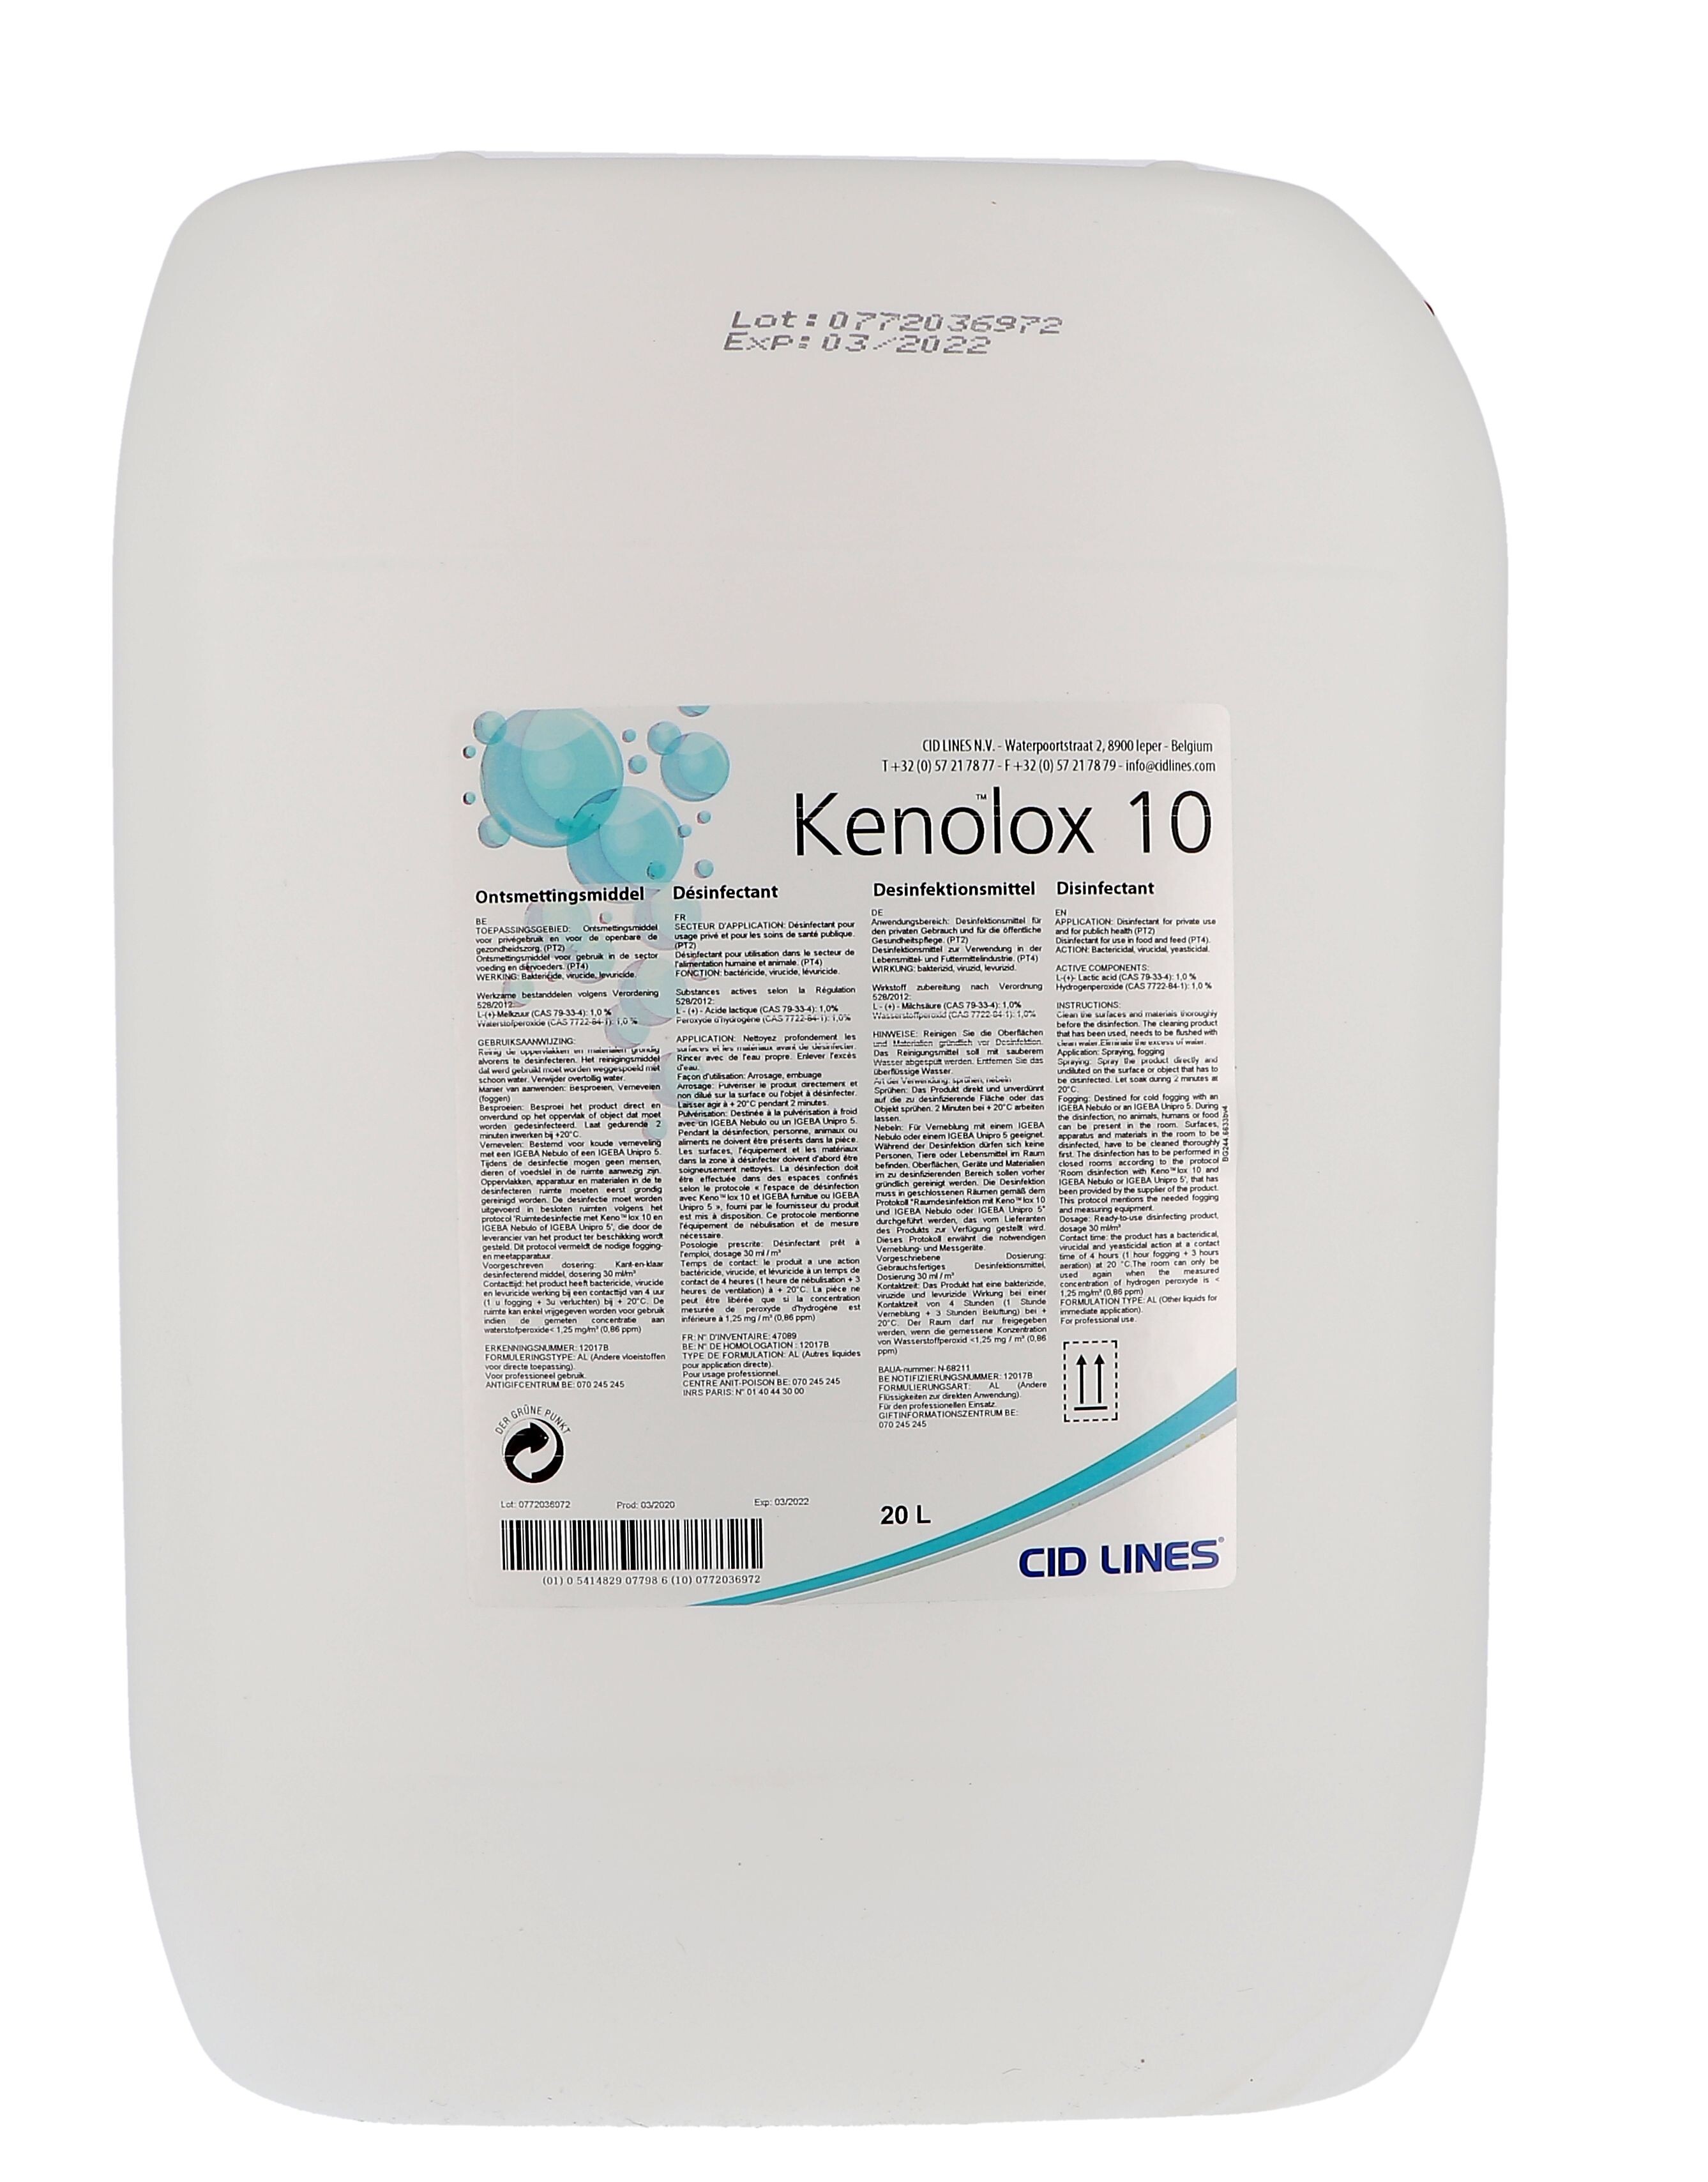 Kenolox 10 Disinfectant 20L Cid Lines